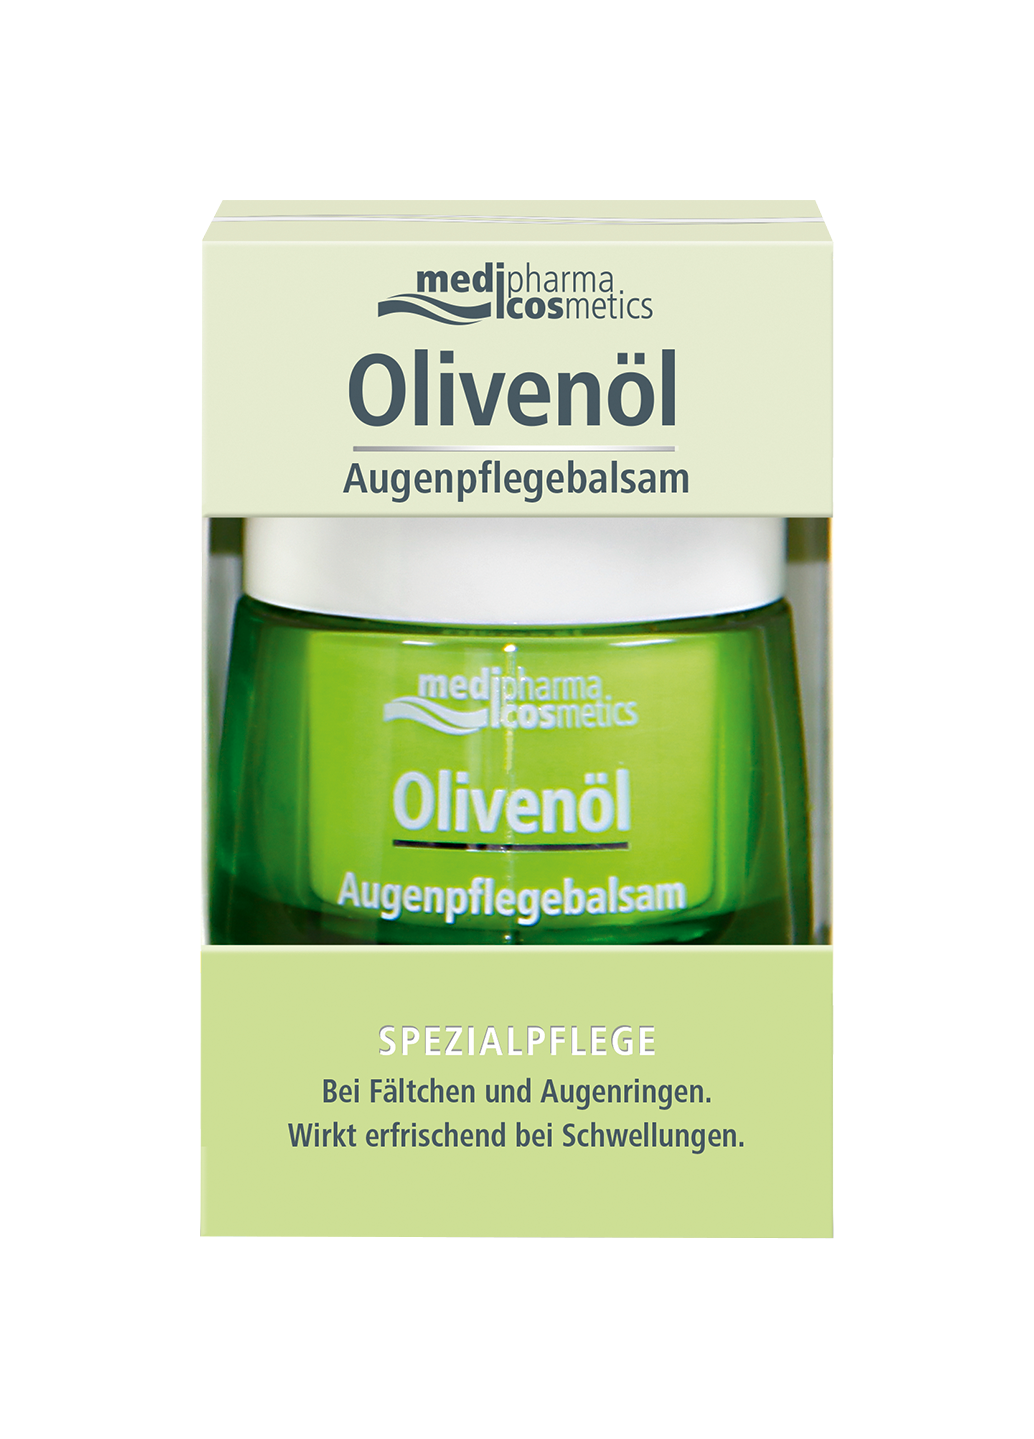 medipharma-cosmetics-Olivenoel-Augenpflegebalsam